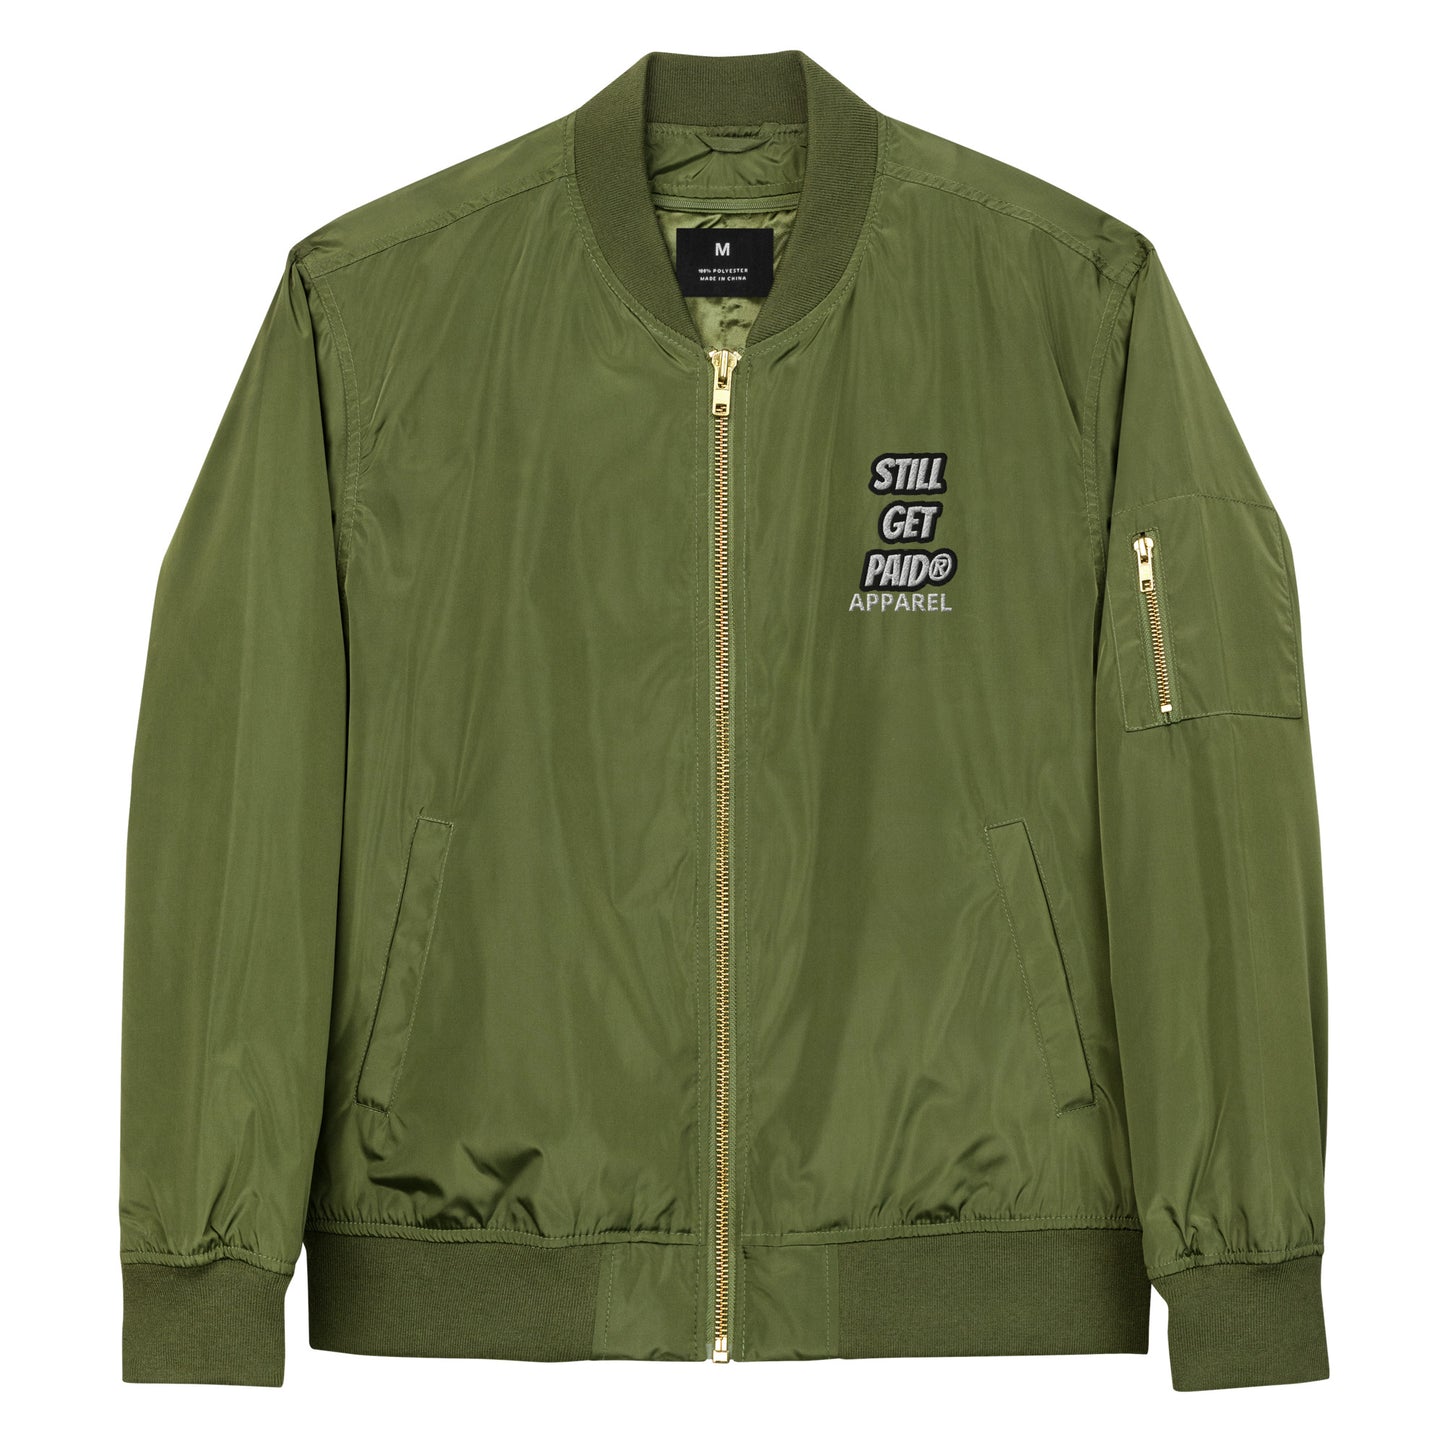 STILLGETPAID APPAREL Premium recycled bomber jacket